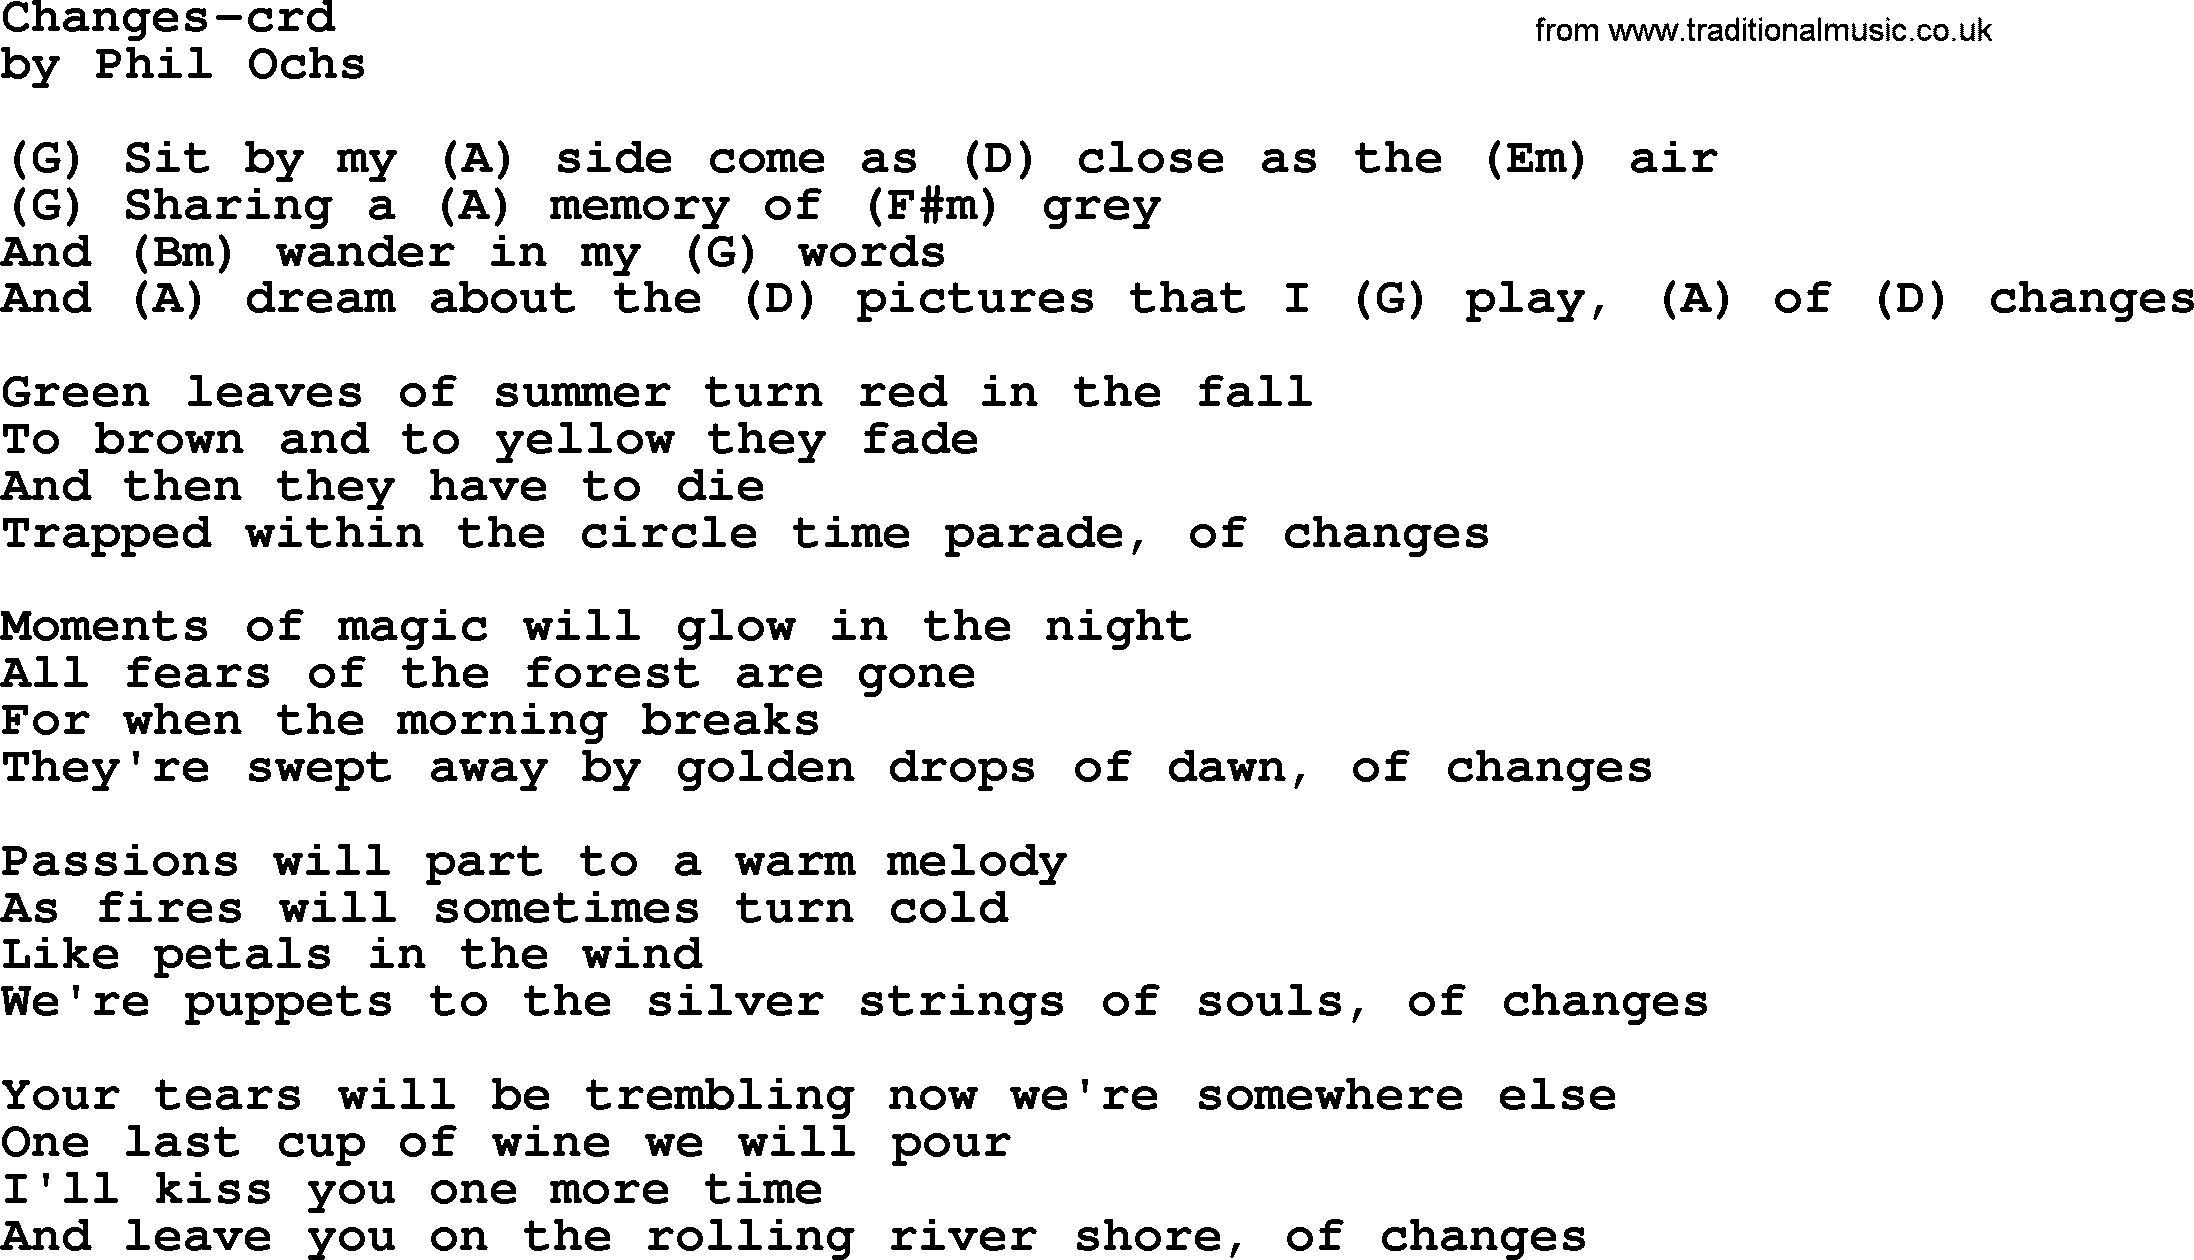 Gordon Lightfoot song Changes, lyrics and chords